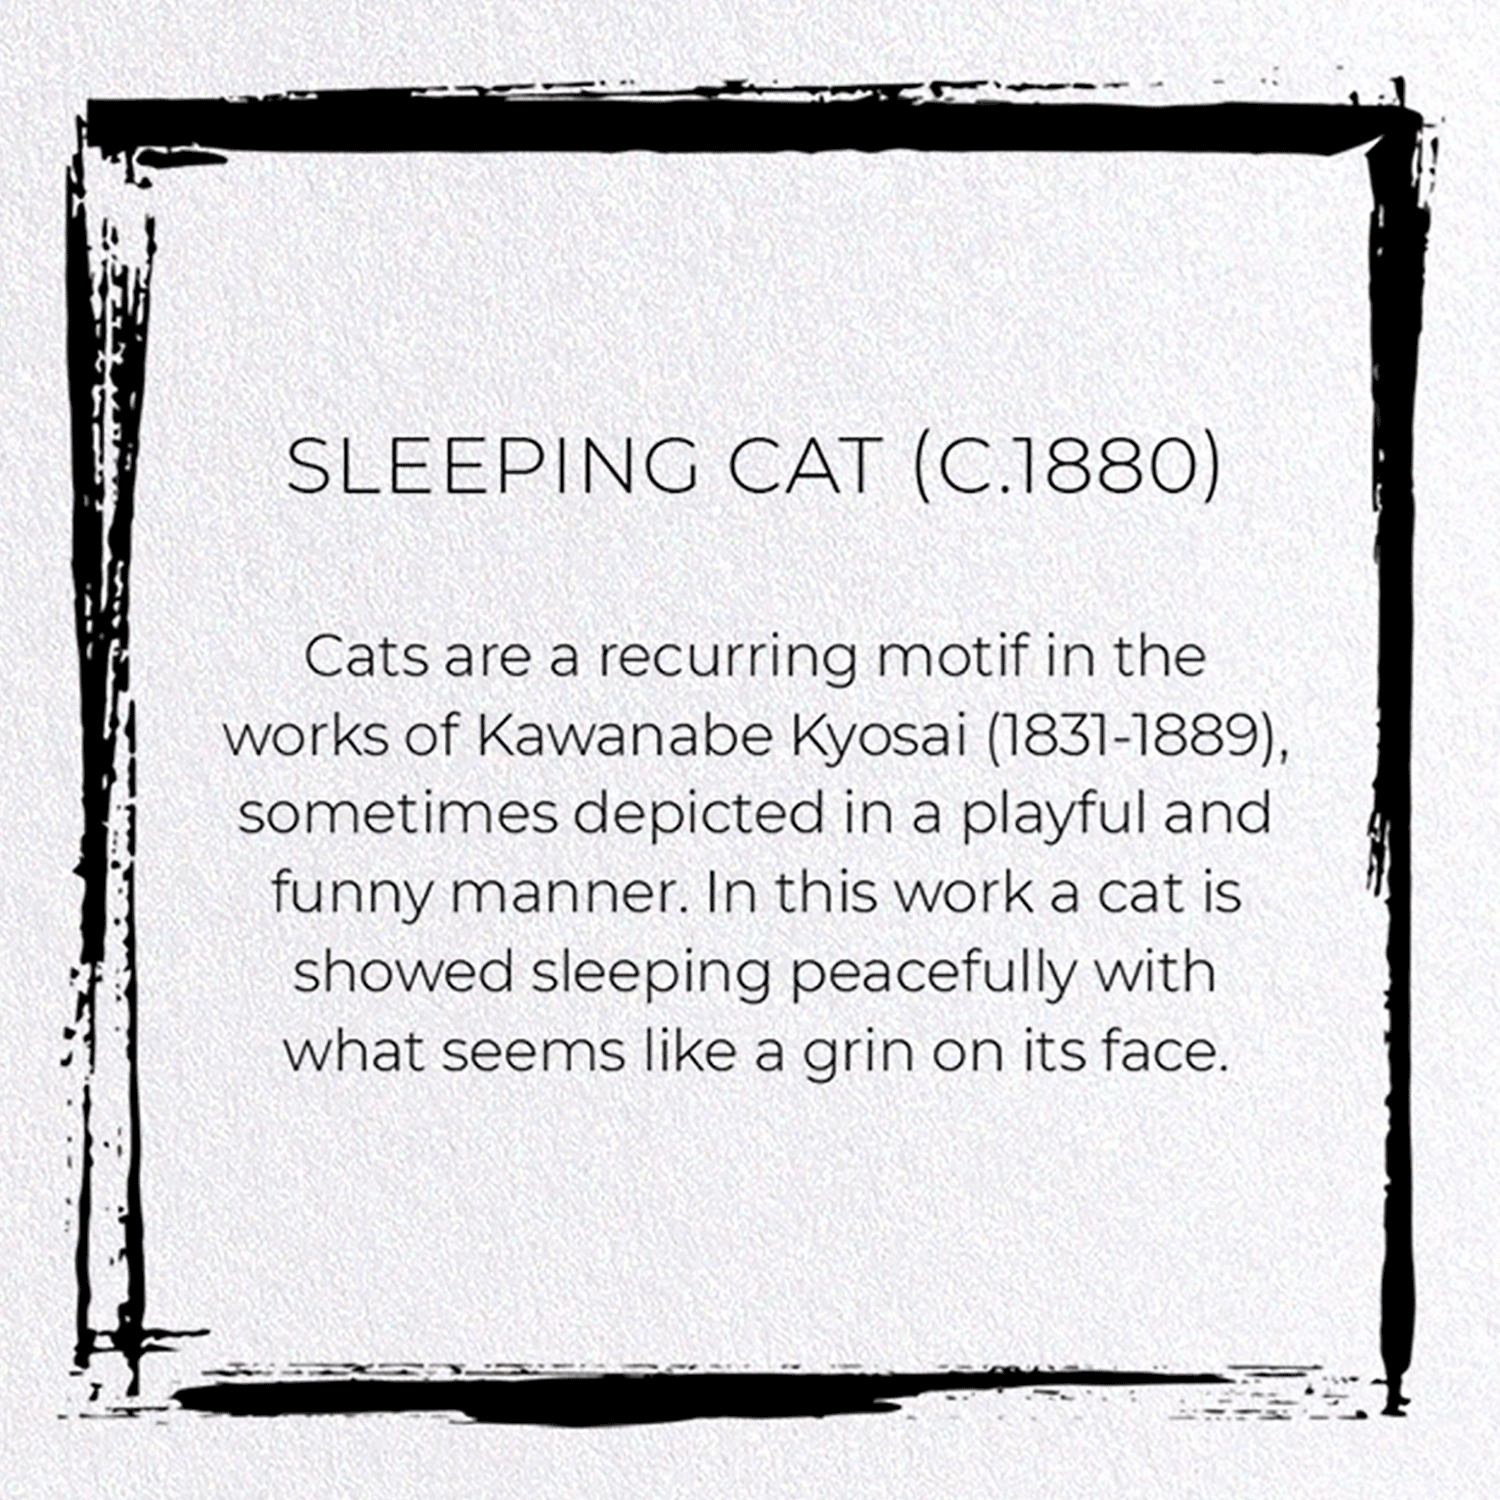 SLEEPING CAT (C.1880): Japanese Greeting Card